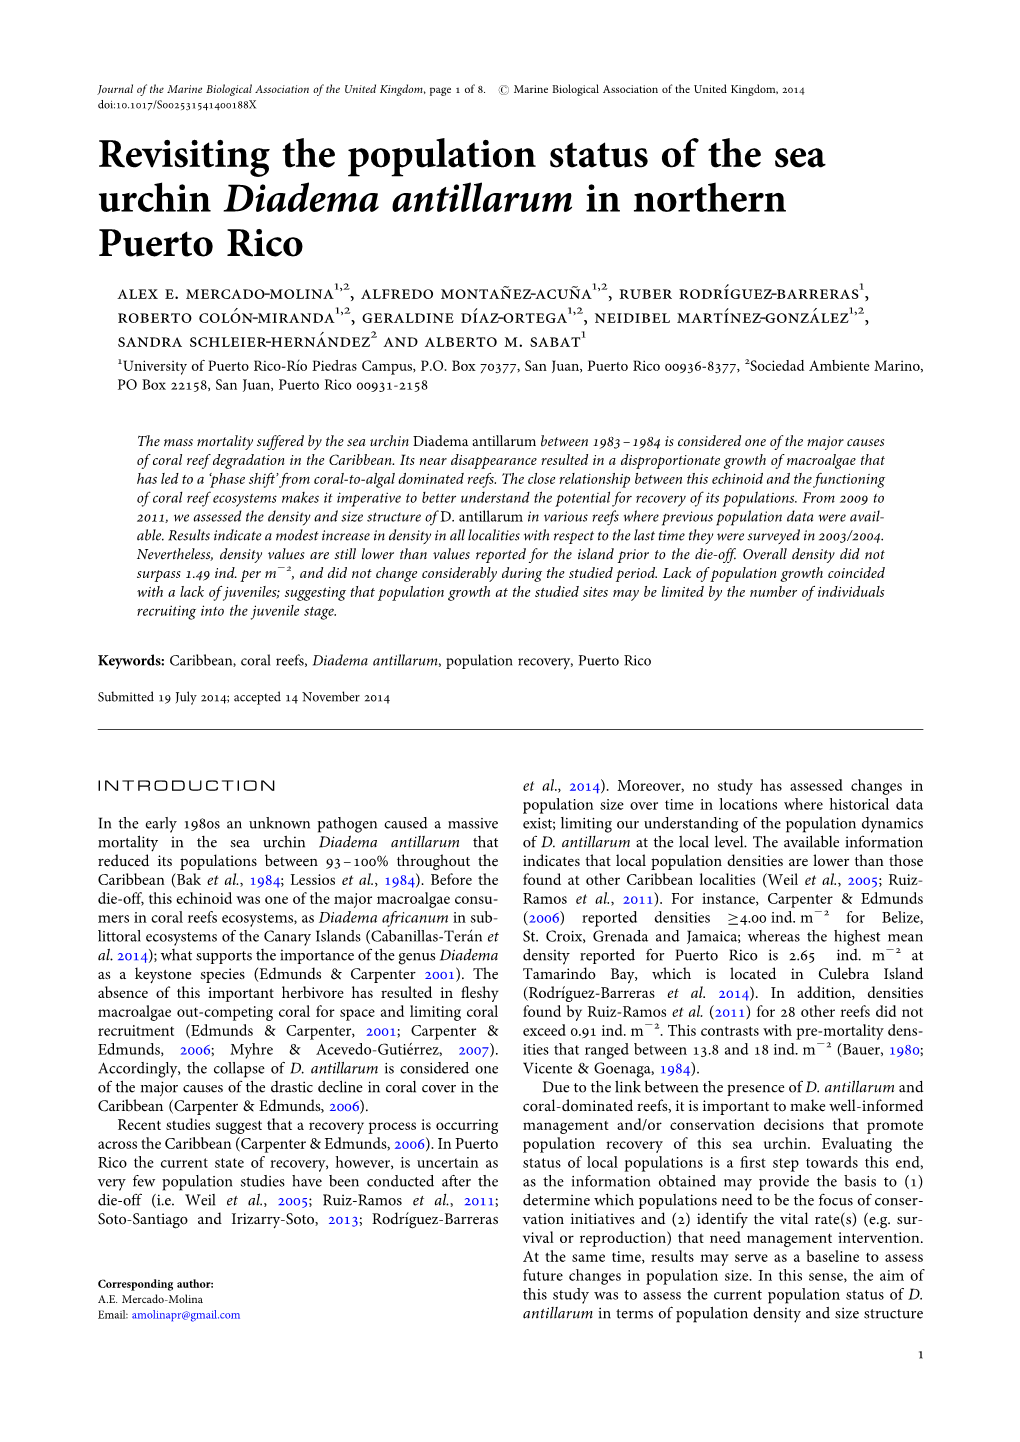 Revisiting the Population Status of the Sea Urchin Diadema Antillarum in Northern Puerto Rico Alex E